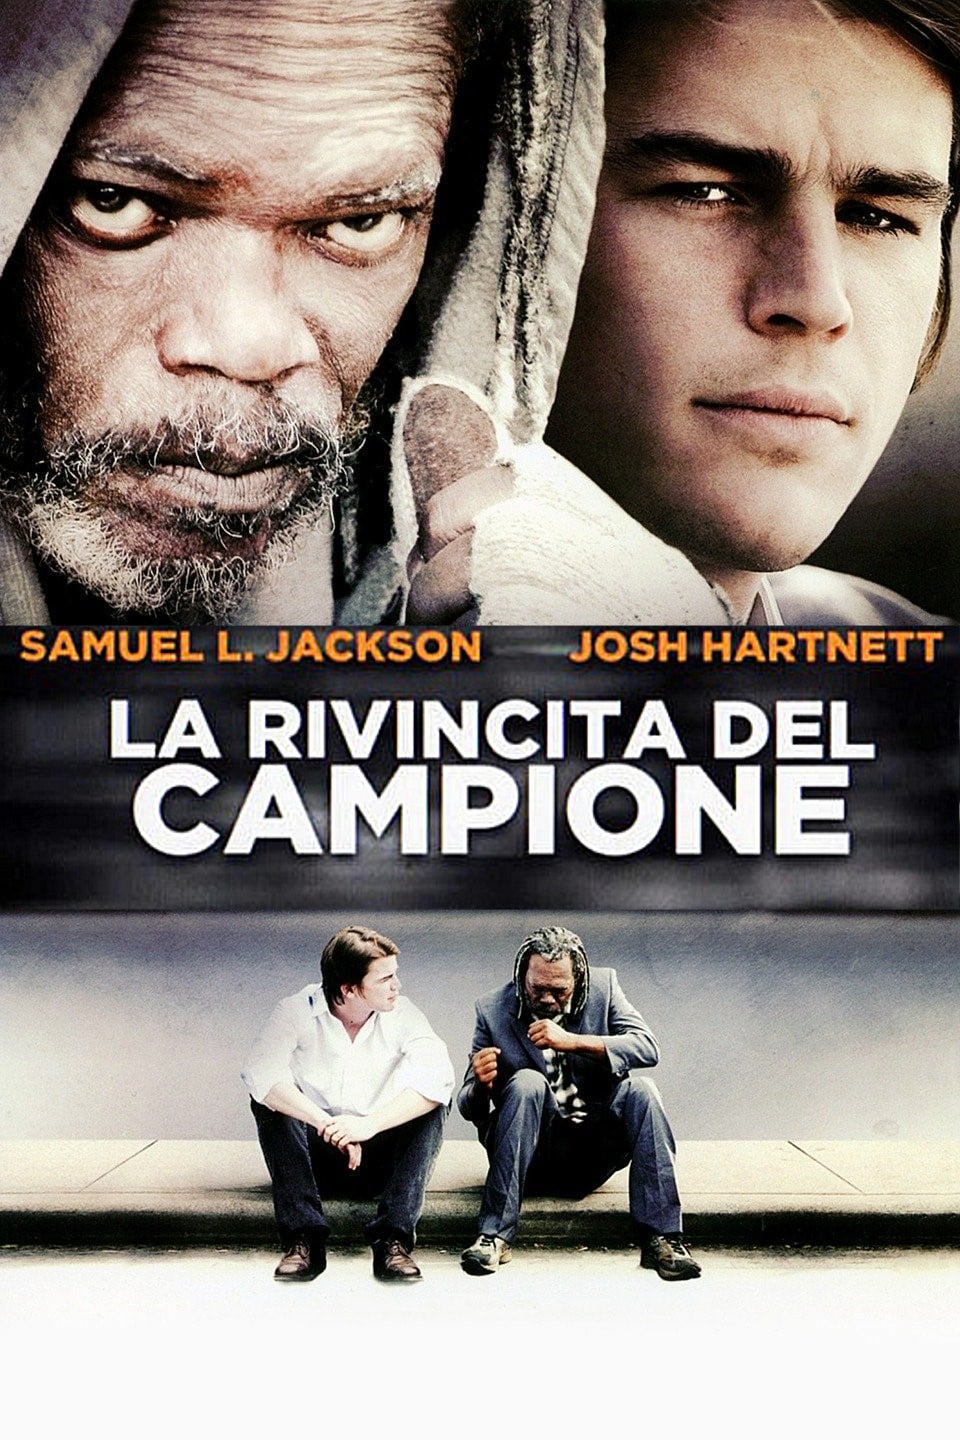 La rivincita del campione (2007)